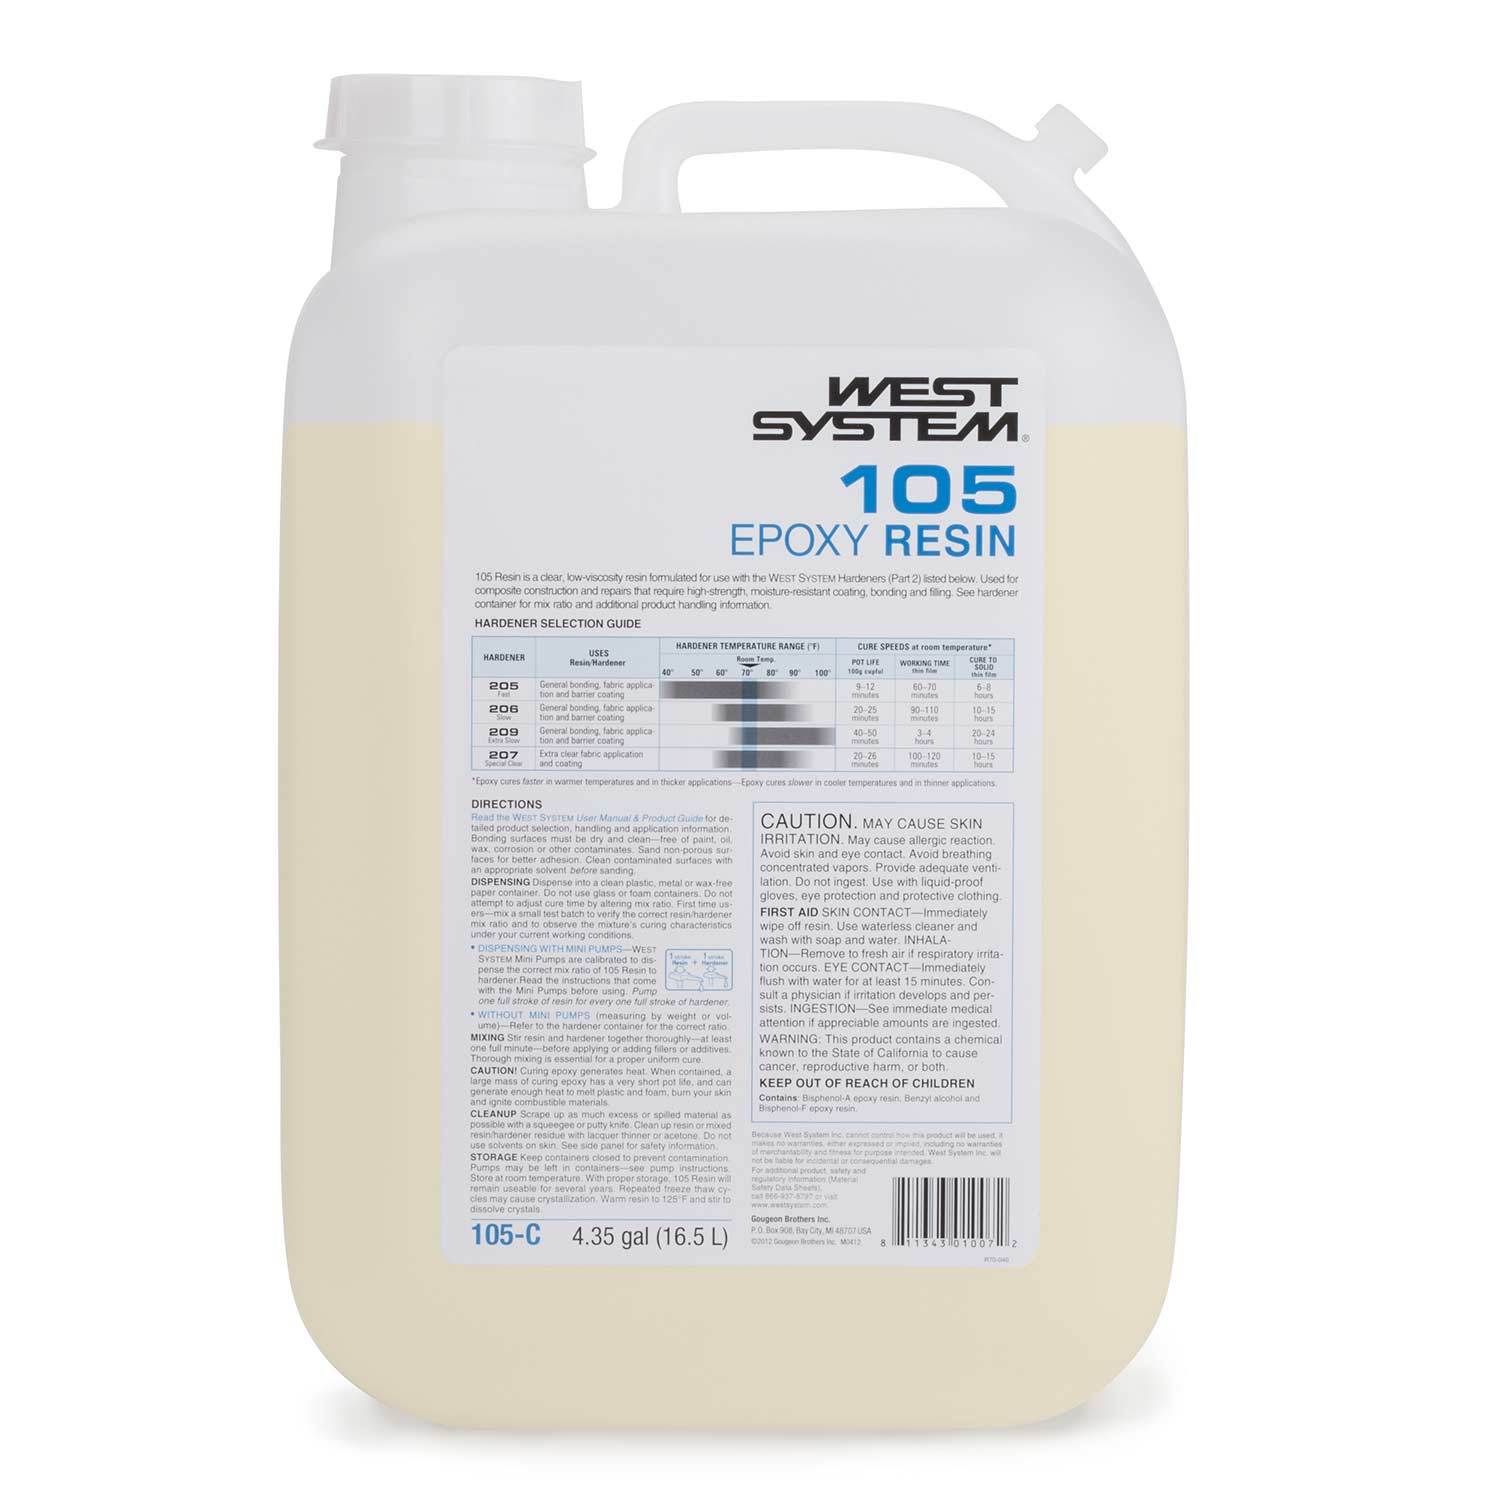 Crystal Clear Epoxy Resin One Gallon Kit, MAS Table Top Pro Epoxy Resin &  Hardener